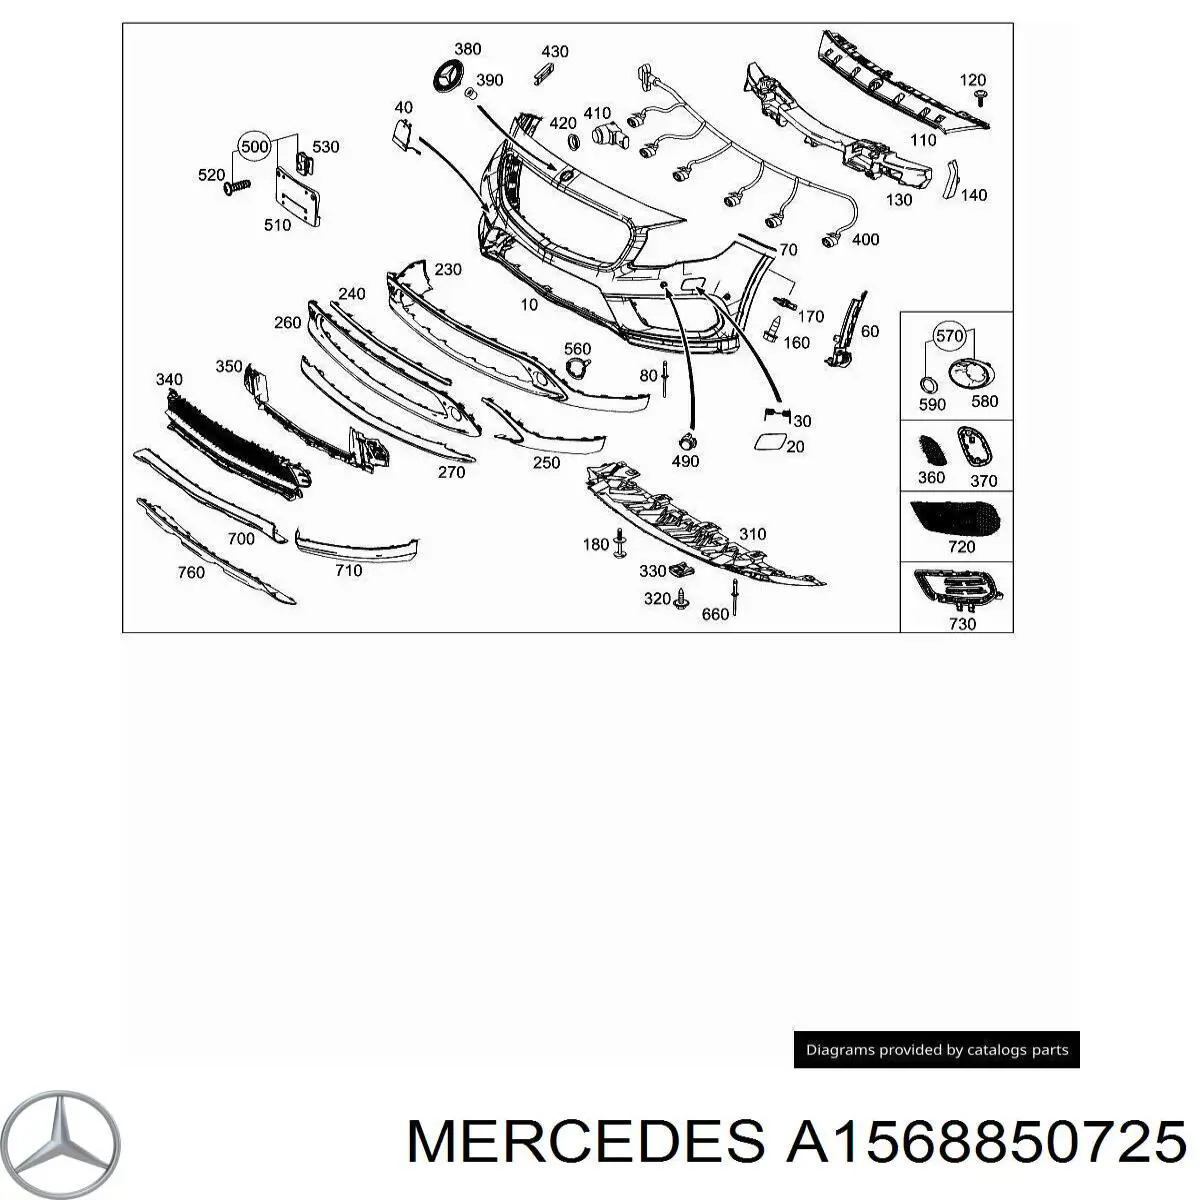 A1568850725 Mercedes 